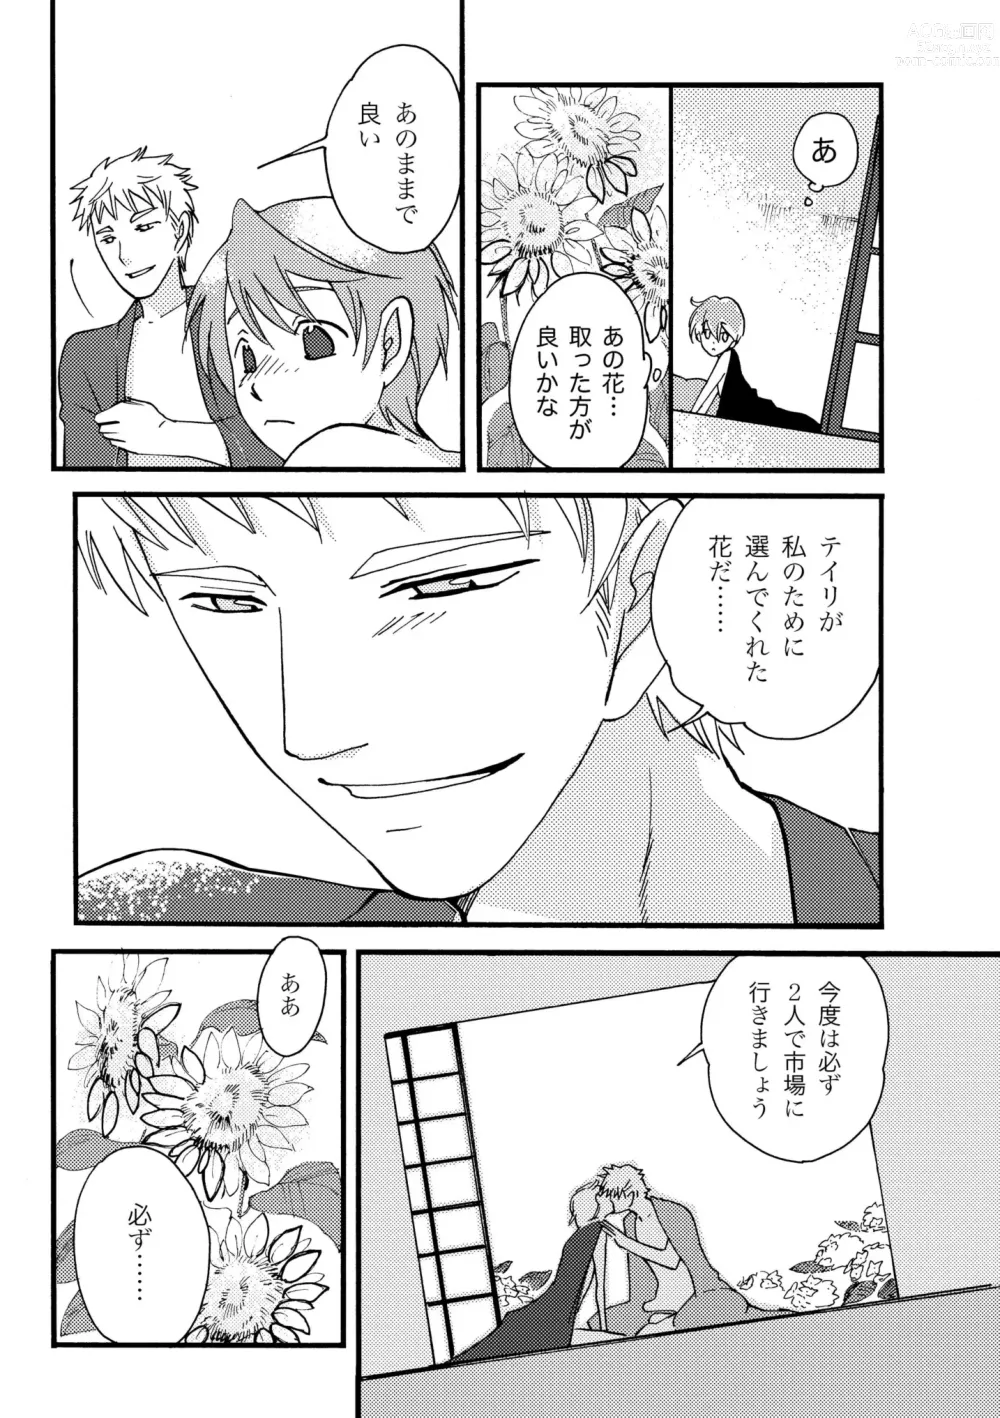 Page 56 of doujinshi Ame no Niwa